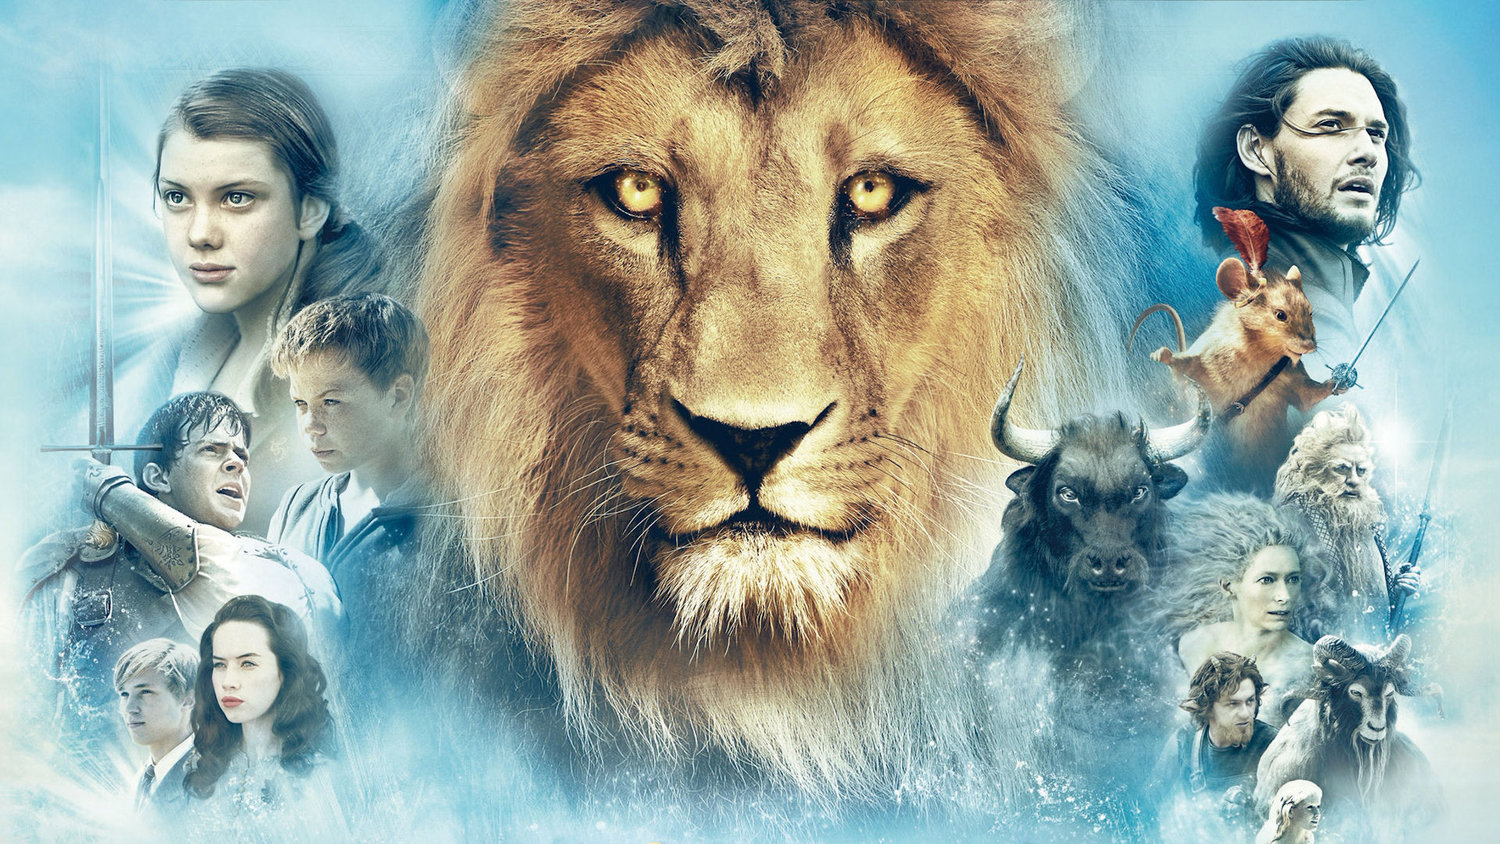 CAPTAIN AMERICA Director Joe Johnston Set to Helm New Narnia Film THE SILVE...